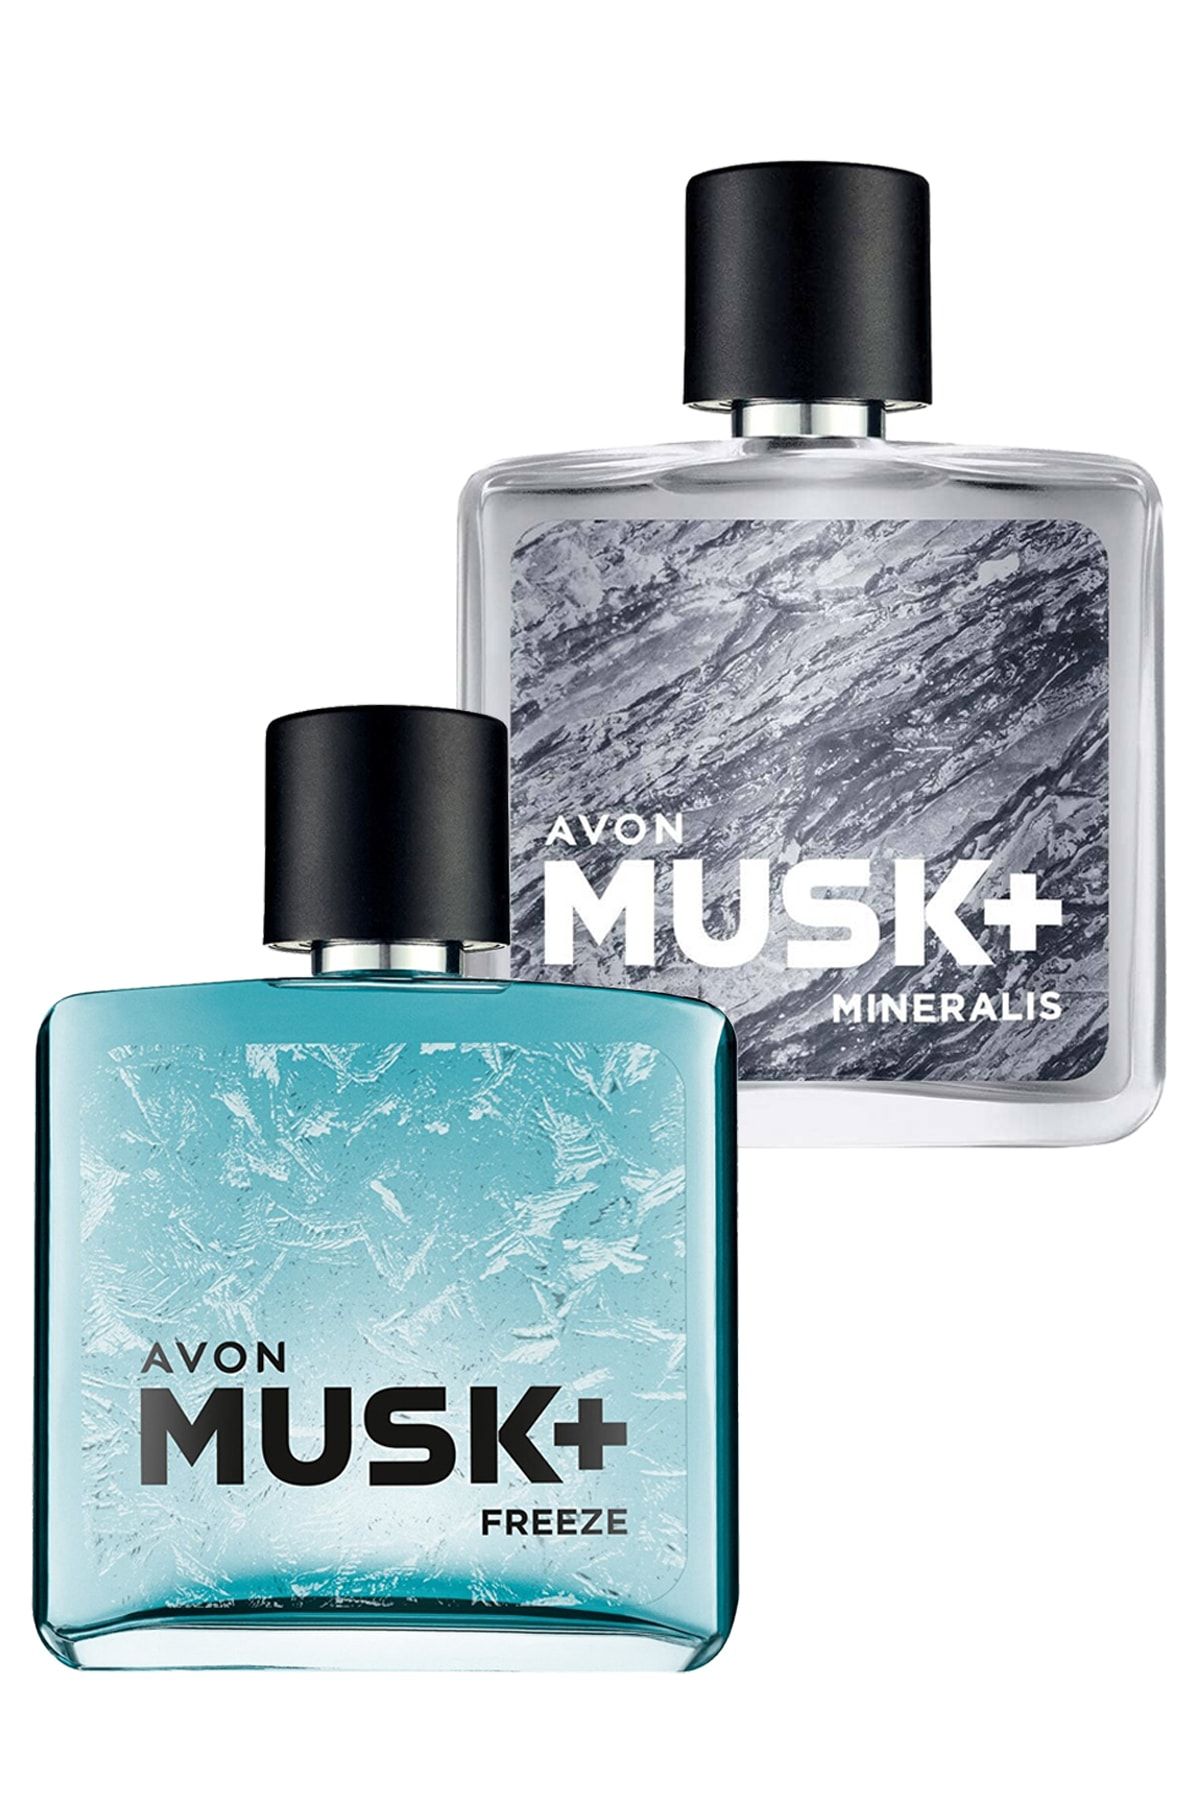 Avon Musk Freeze ve Mineralis Erkek Parfüm Paketi